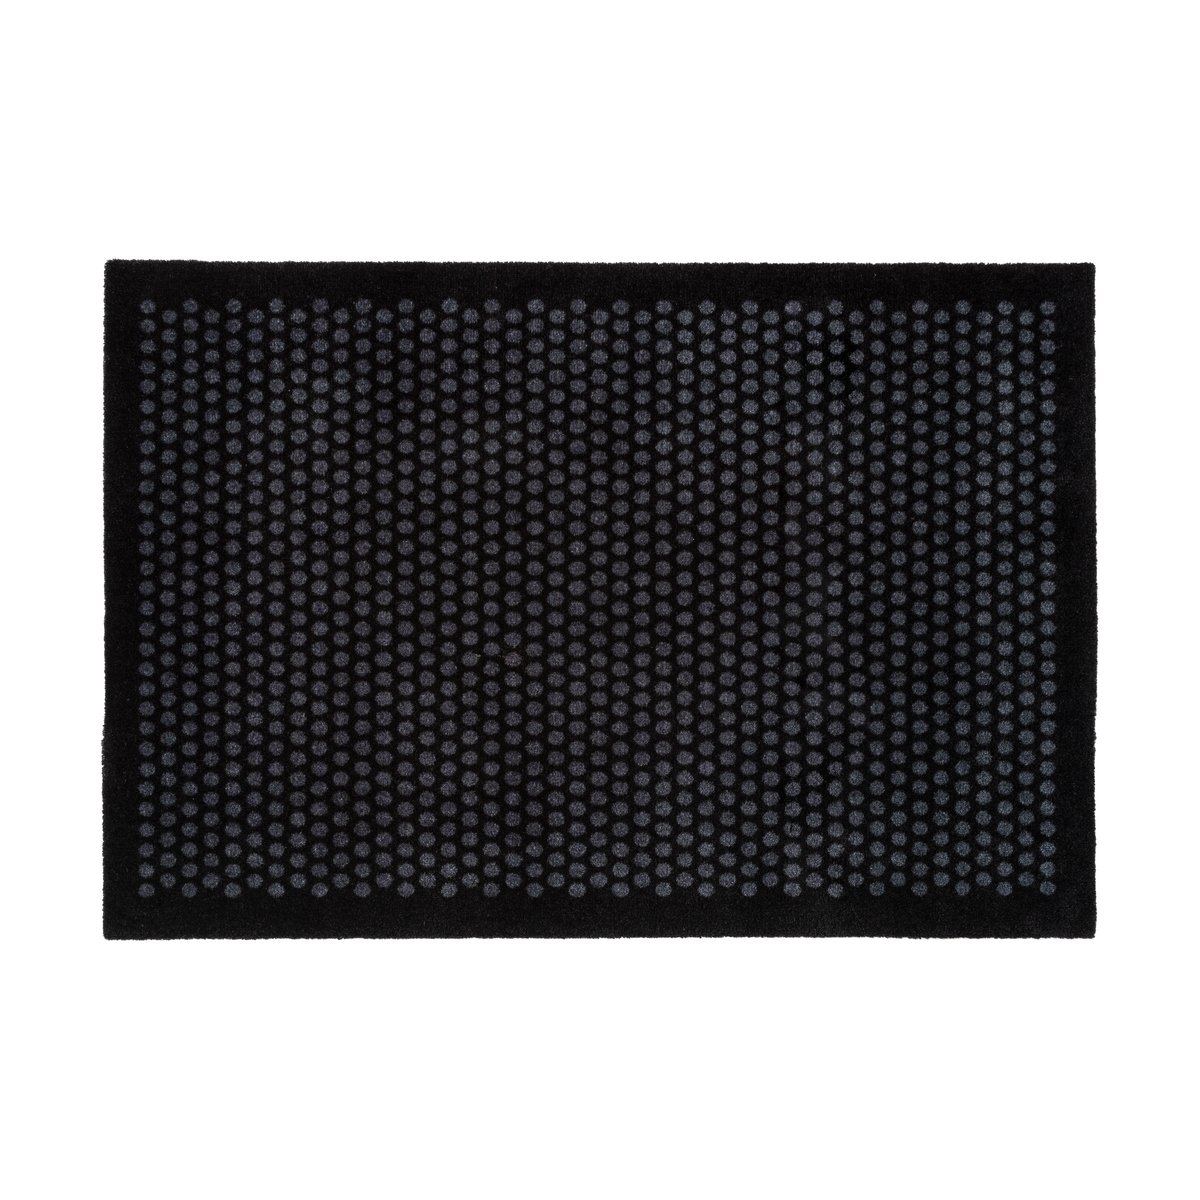 tica copenhagen Dot gangmat Black, 90x130 cm